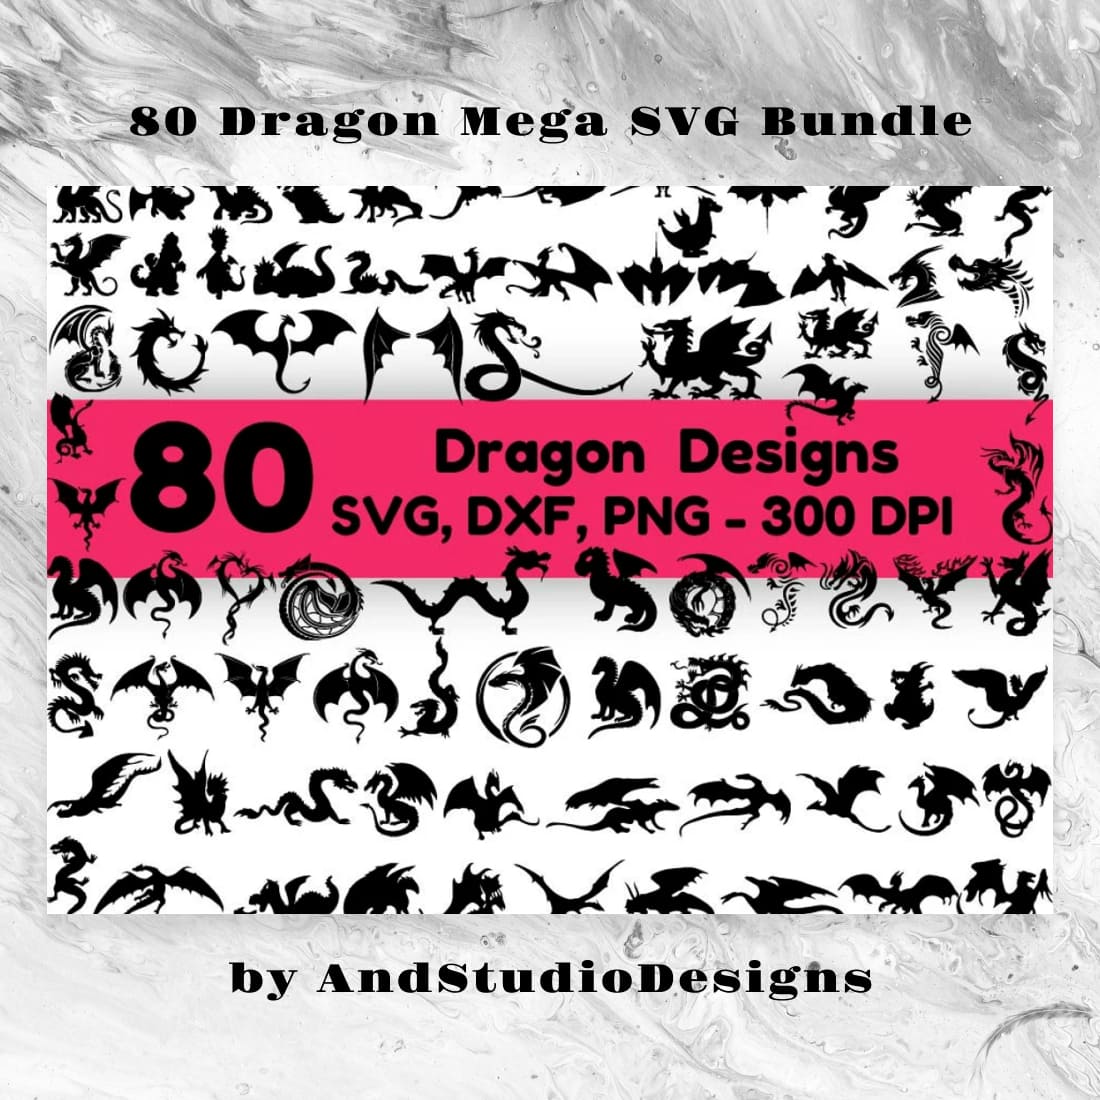 mega svg bundle dragon cut cover